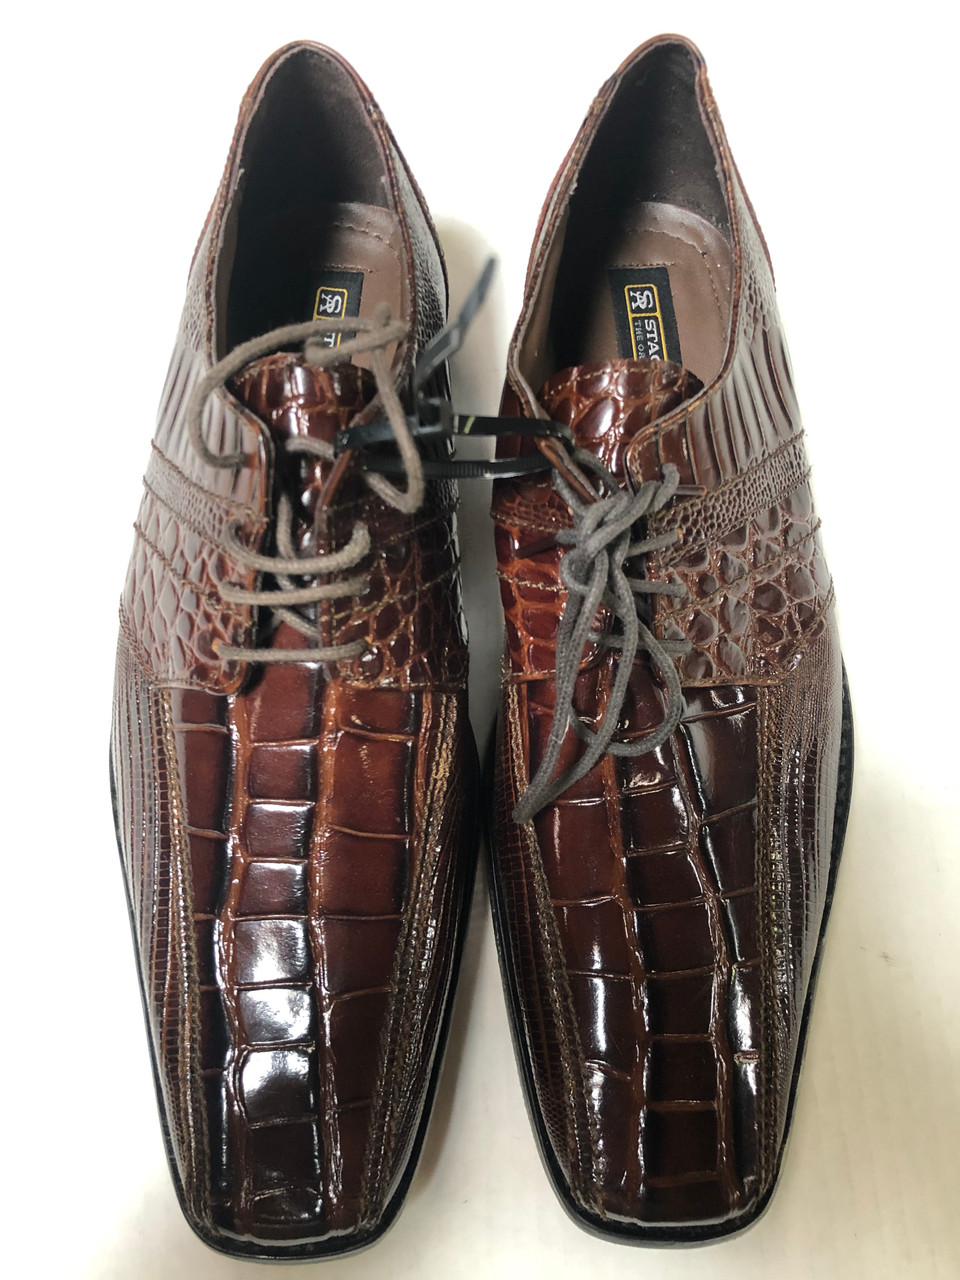 crocs men's dress shoes